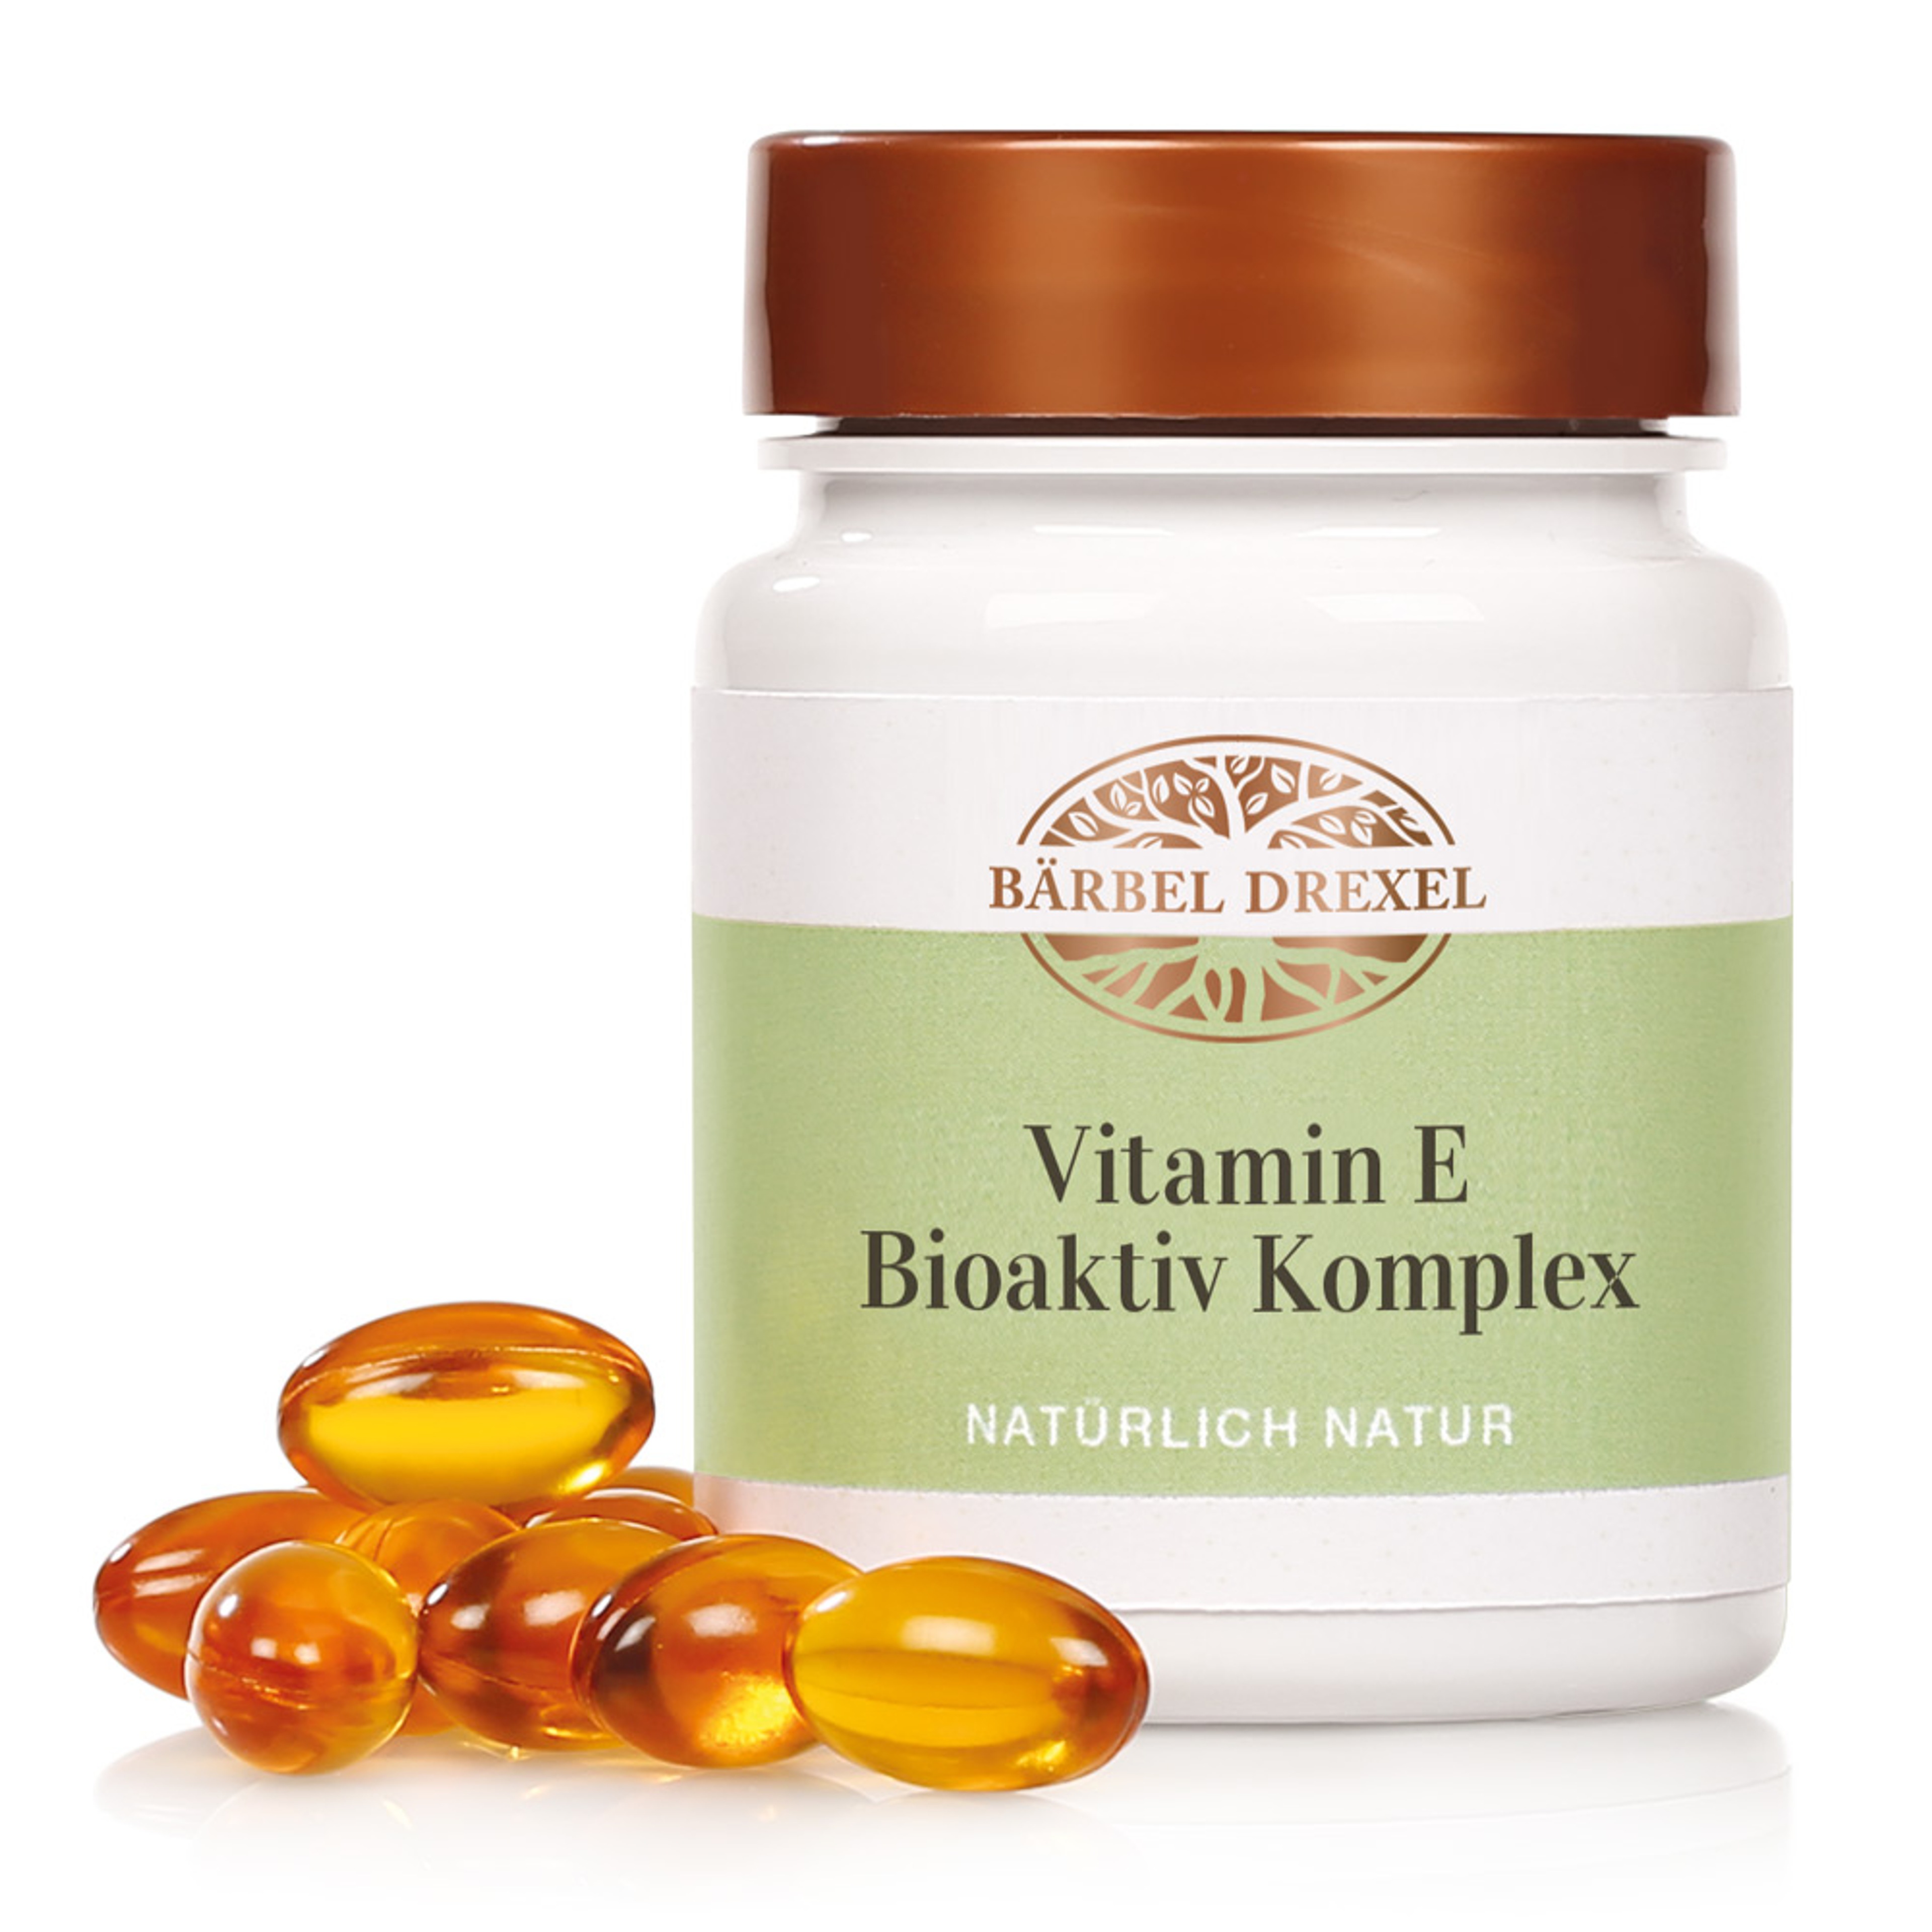 vitamin-e-bioaktiv-komplex-kapseln-72166-mit-kapseln_12.jpg